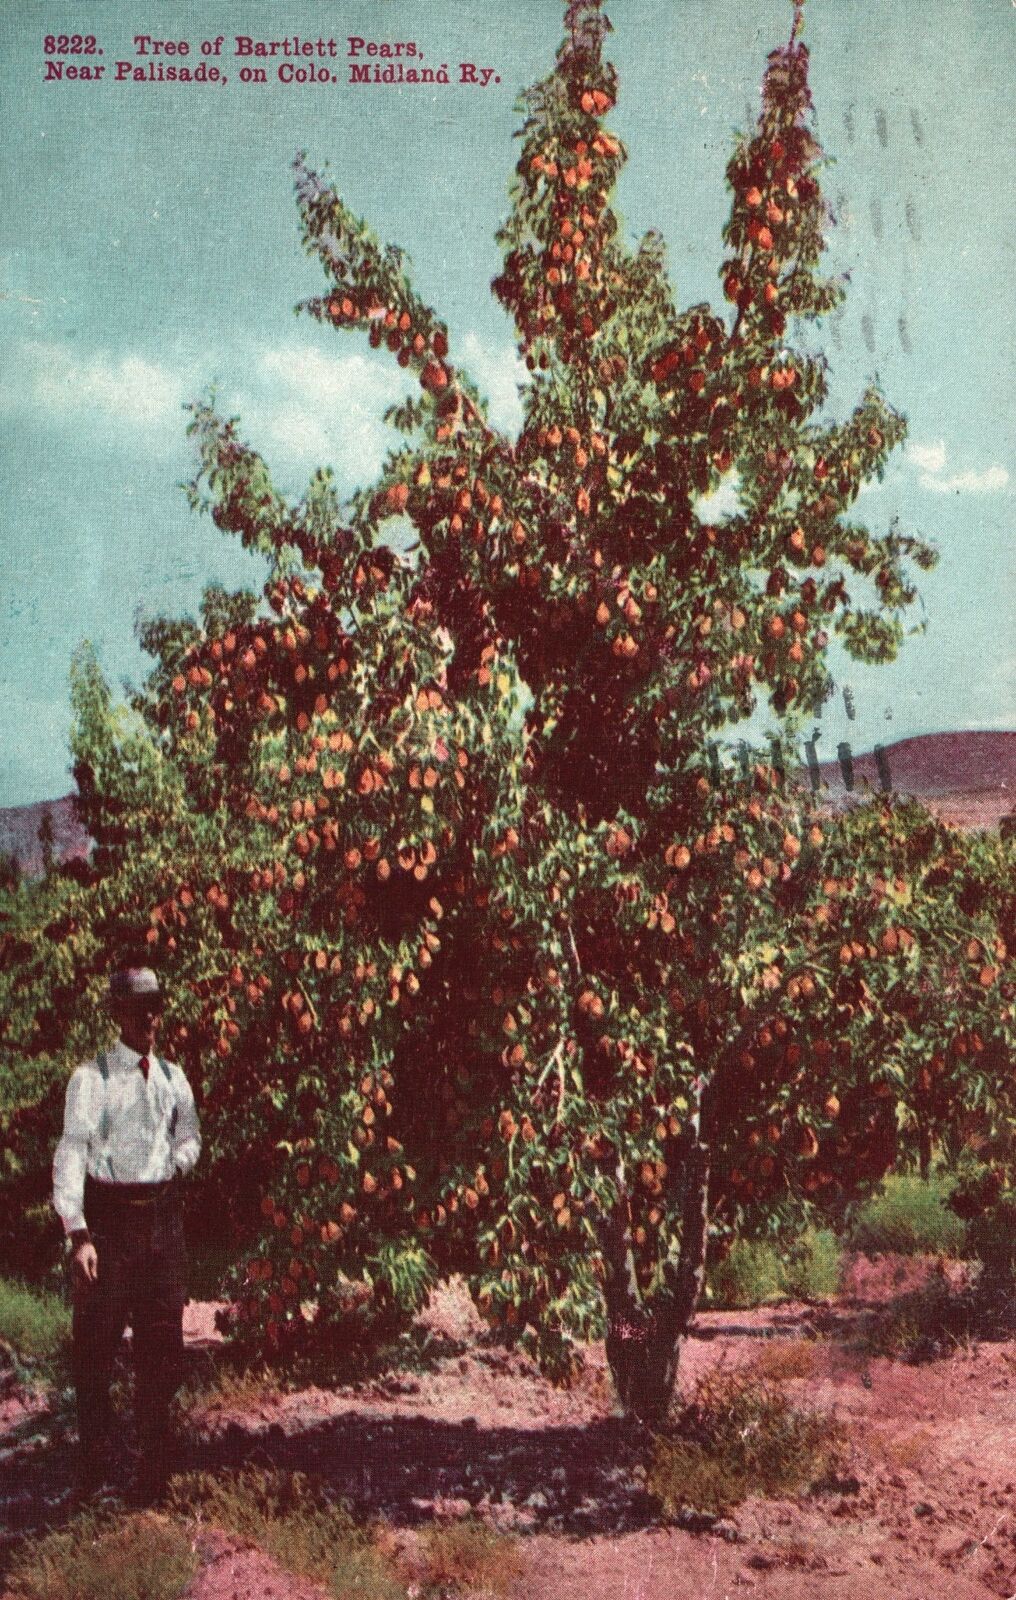 Vintage Postcard 1909 Tree Of Bartlett Pears Near Palisades Minland Ry. Colorado